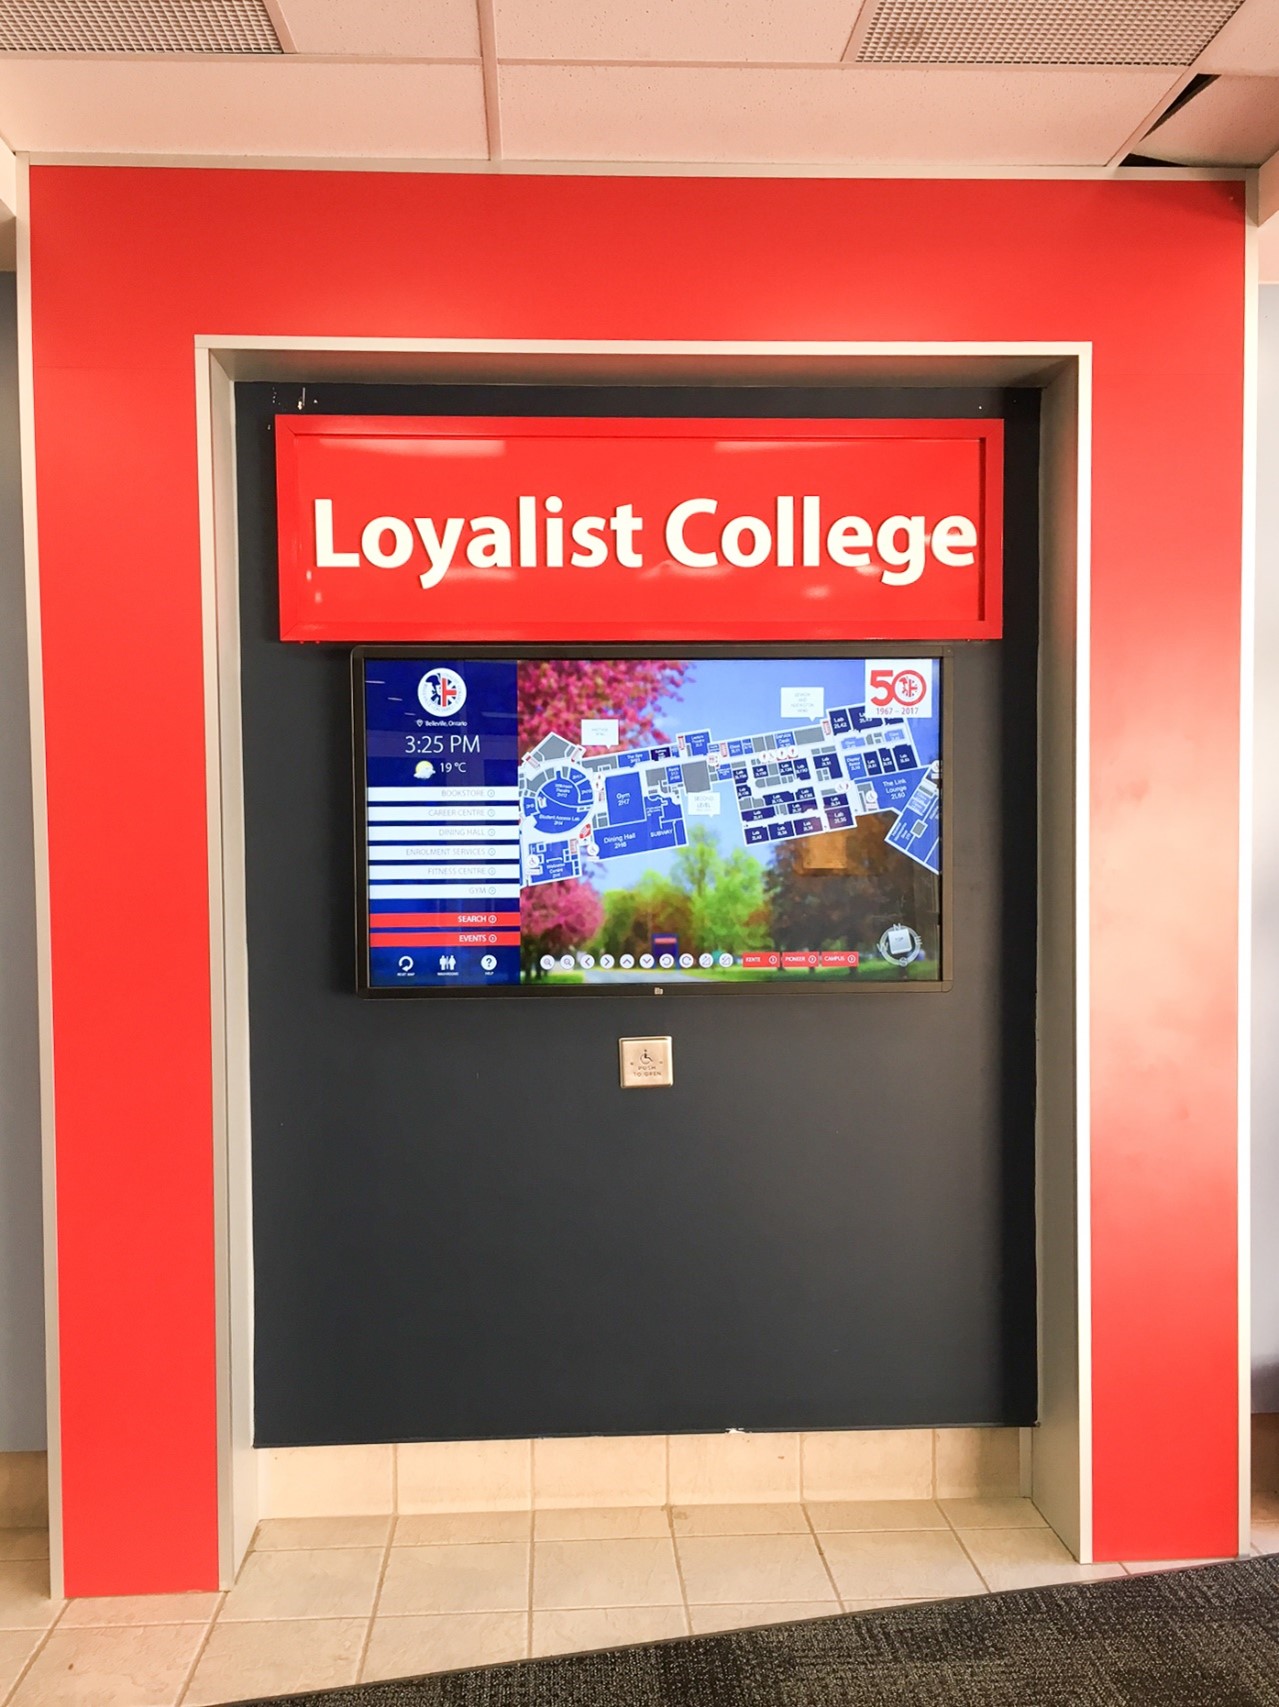 digital signage for higher education, loyalist college, campus wayfinding